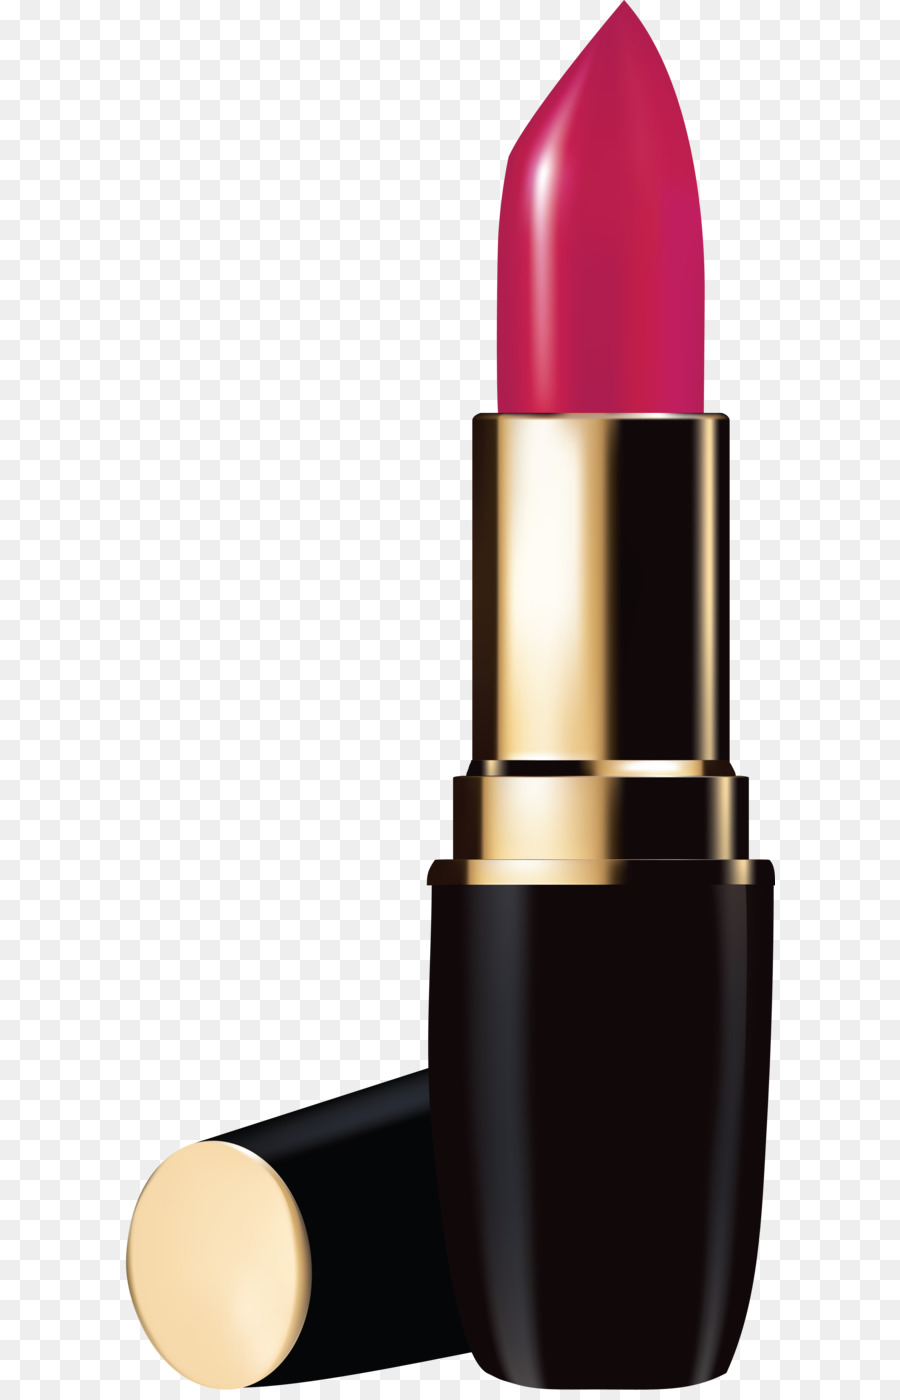 Lipstick Cosmetics Clip art - Lipstick PNG png download - 2789*5971 - Free Transparent Lipstick png Download.